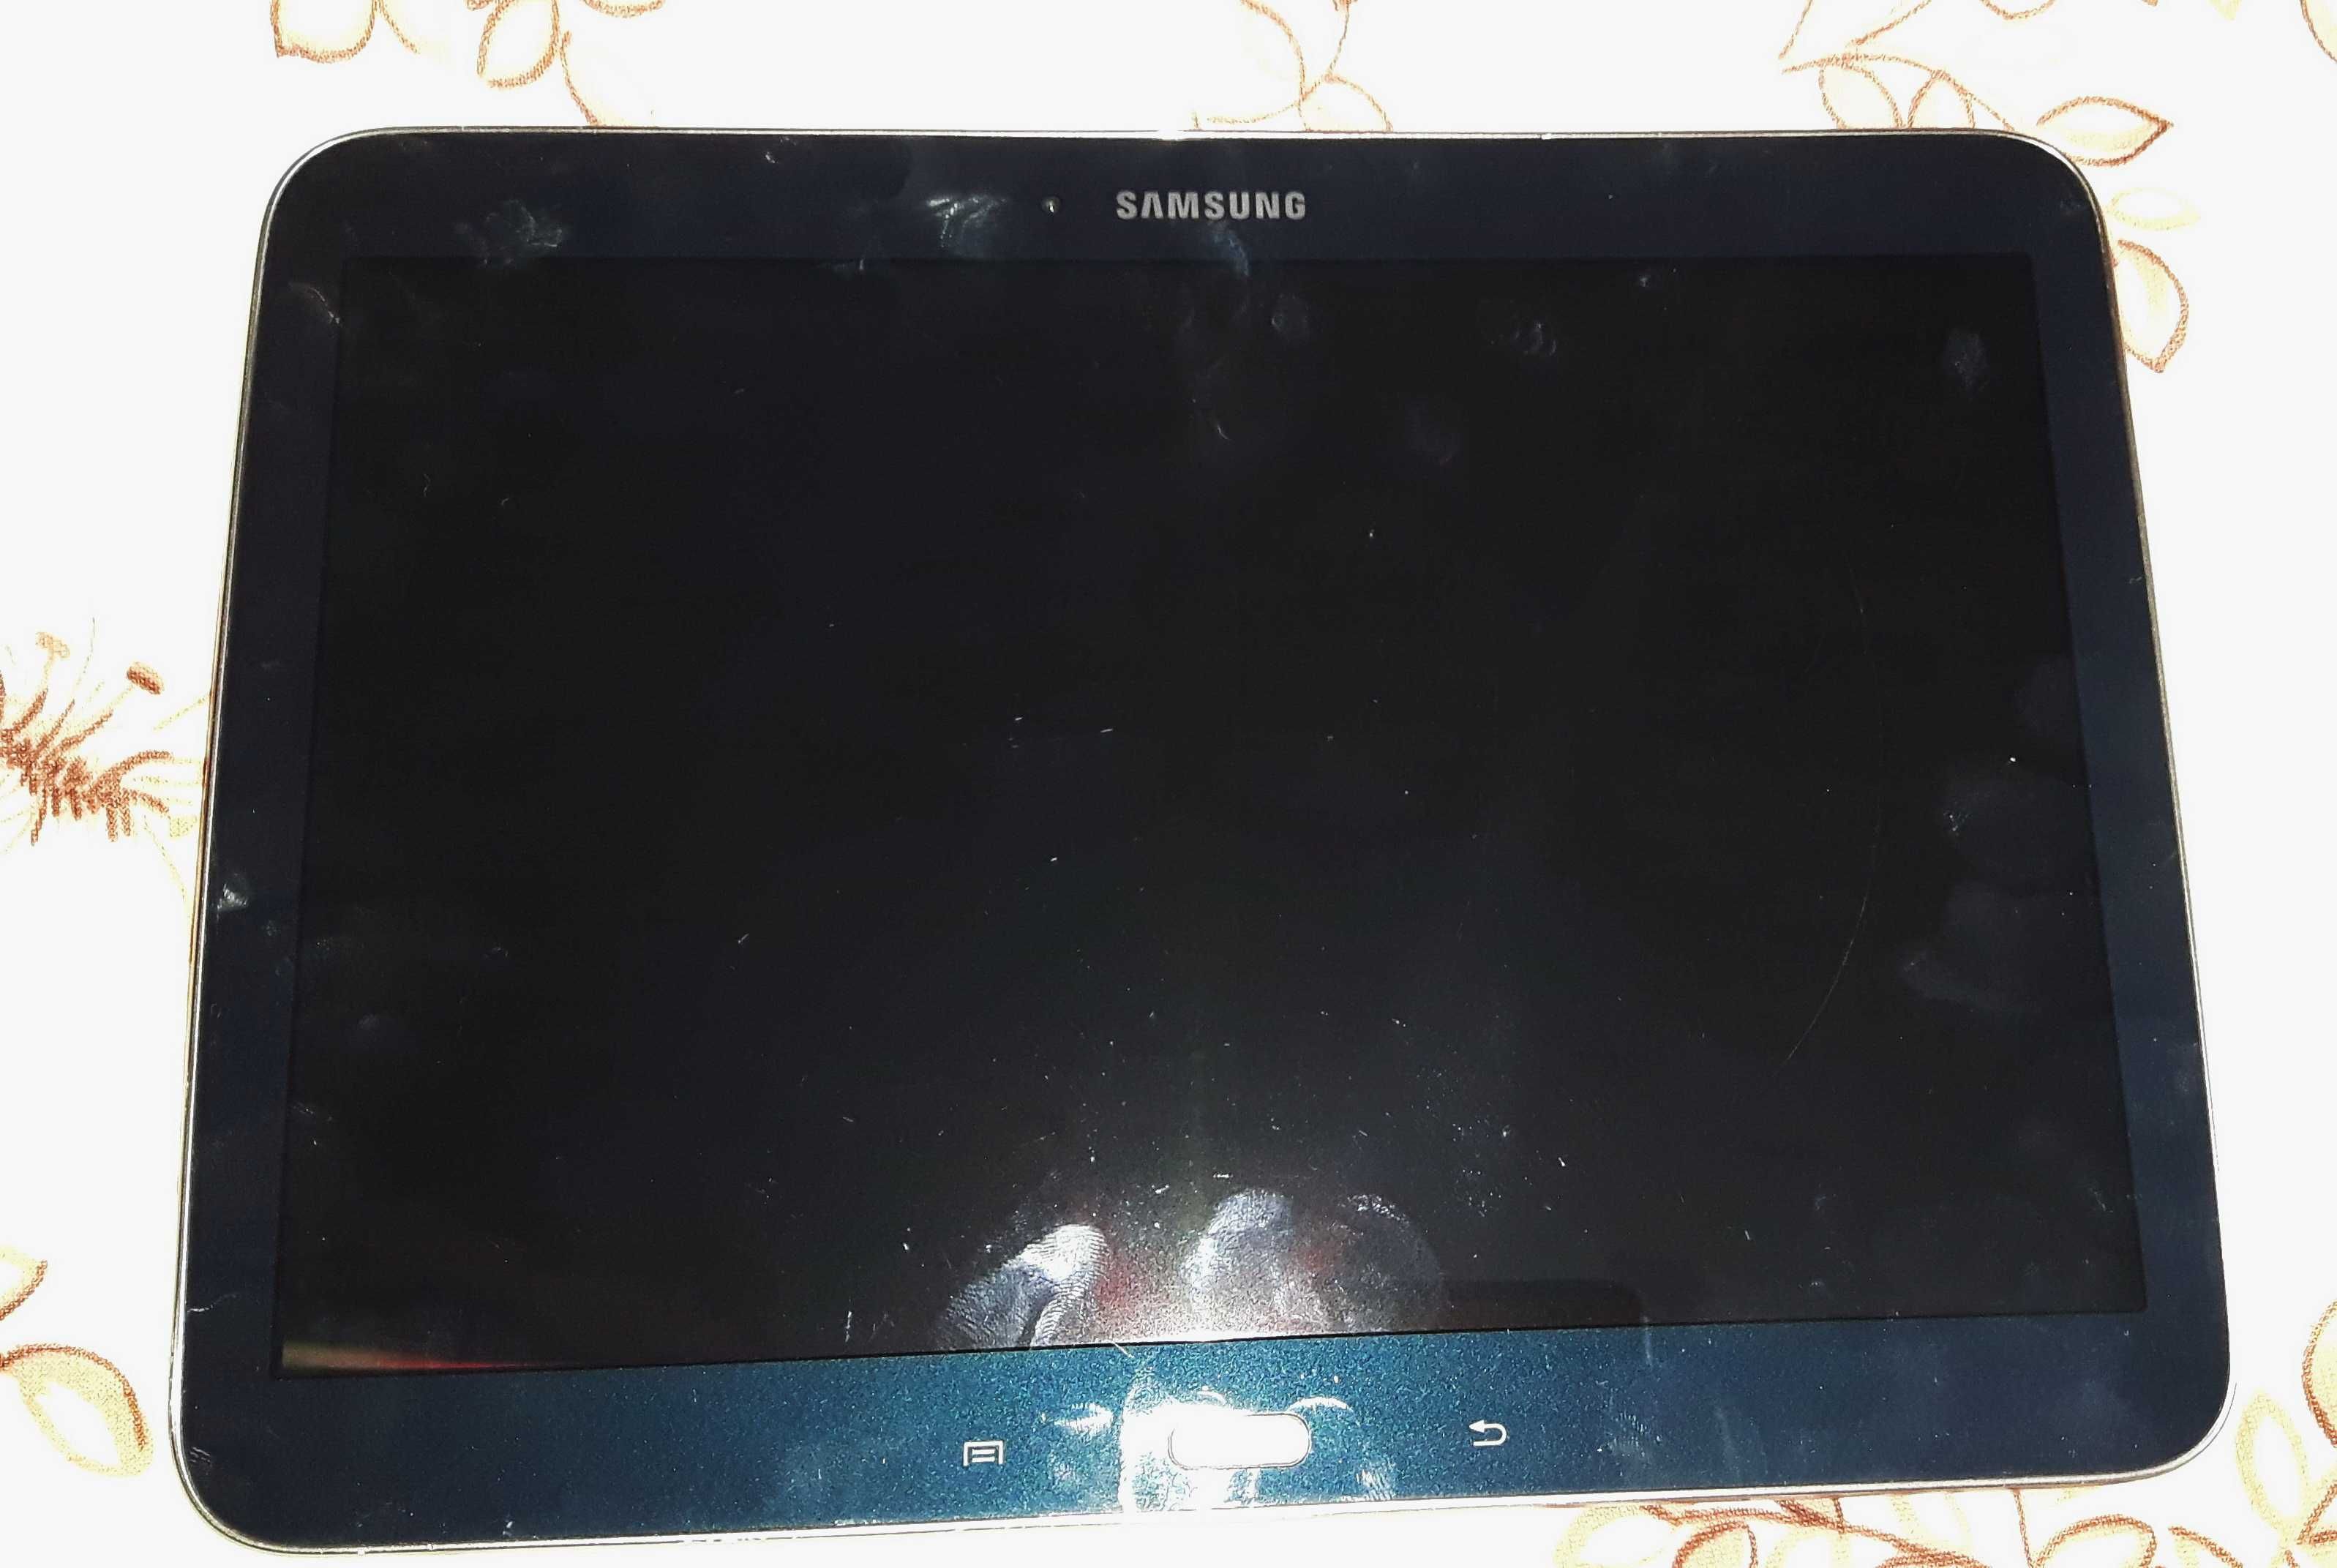 Планшет Samung Galaxy Tab 3 GT-P5210 под ремонт или на запчасти